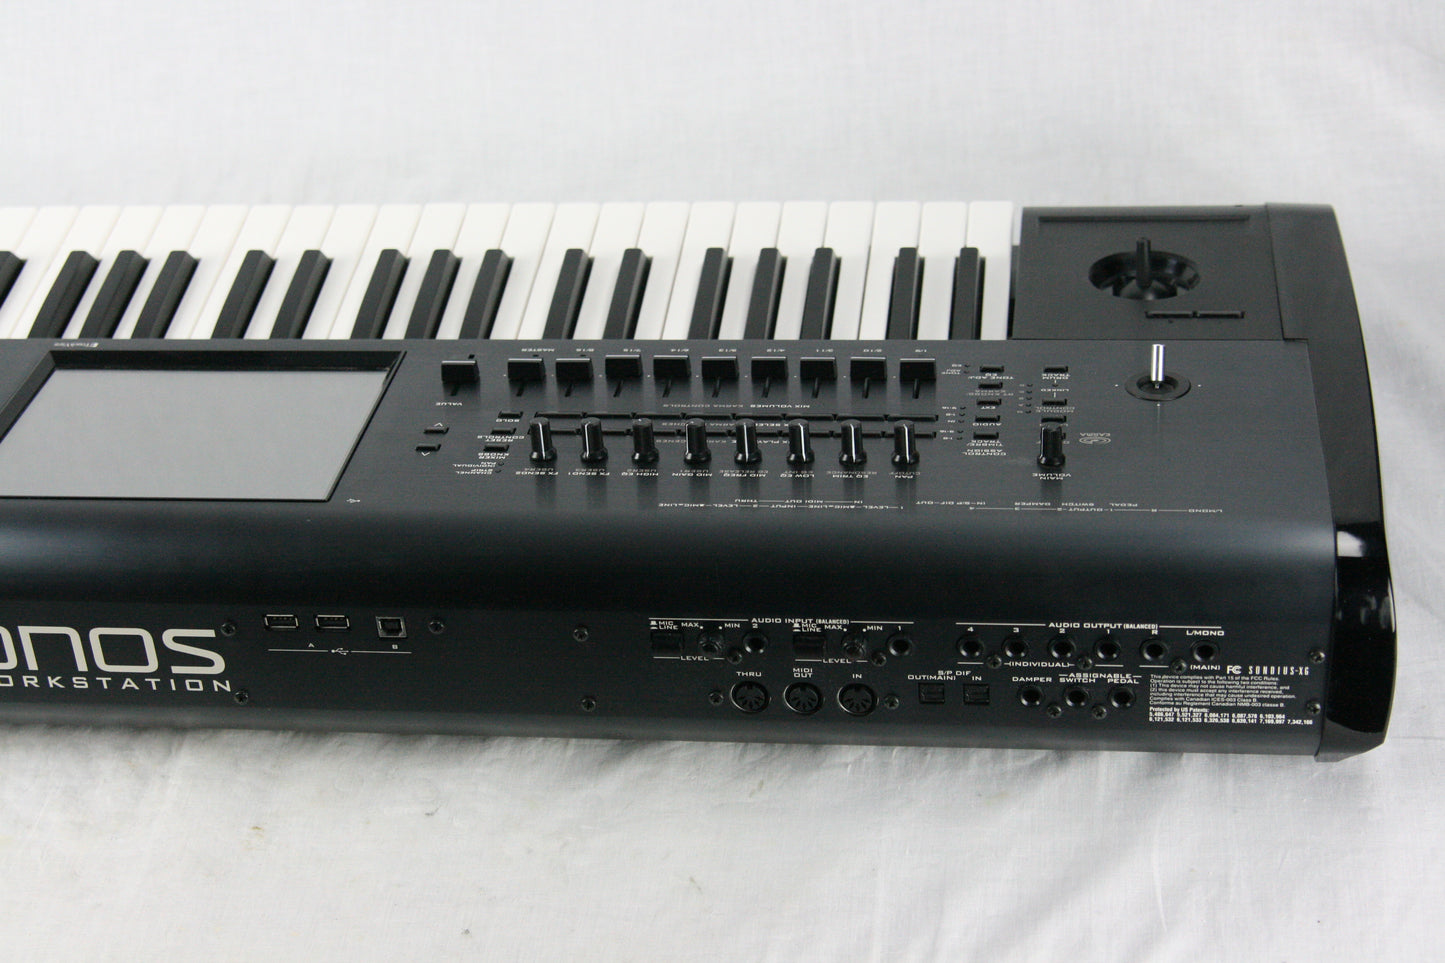 Korg Kronos-61 Keyboard Synthesizer Music Workstation 61 Key Made in Japan